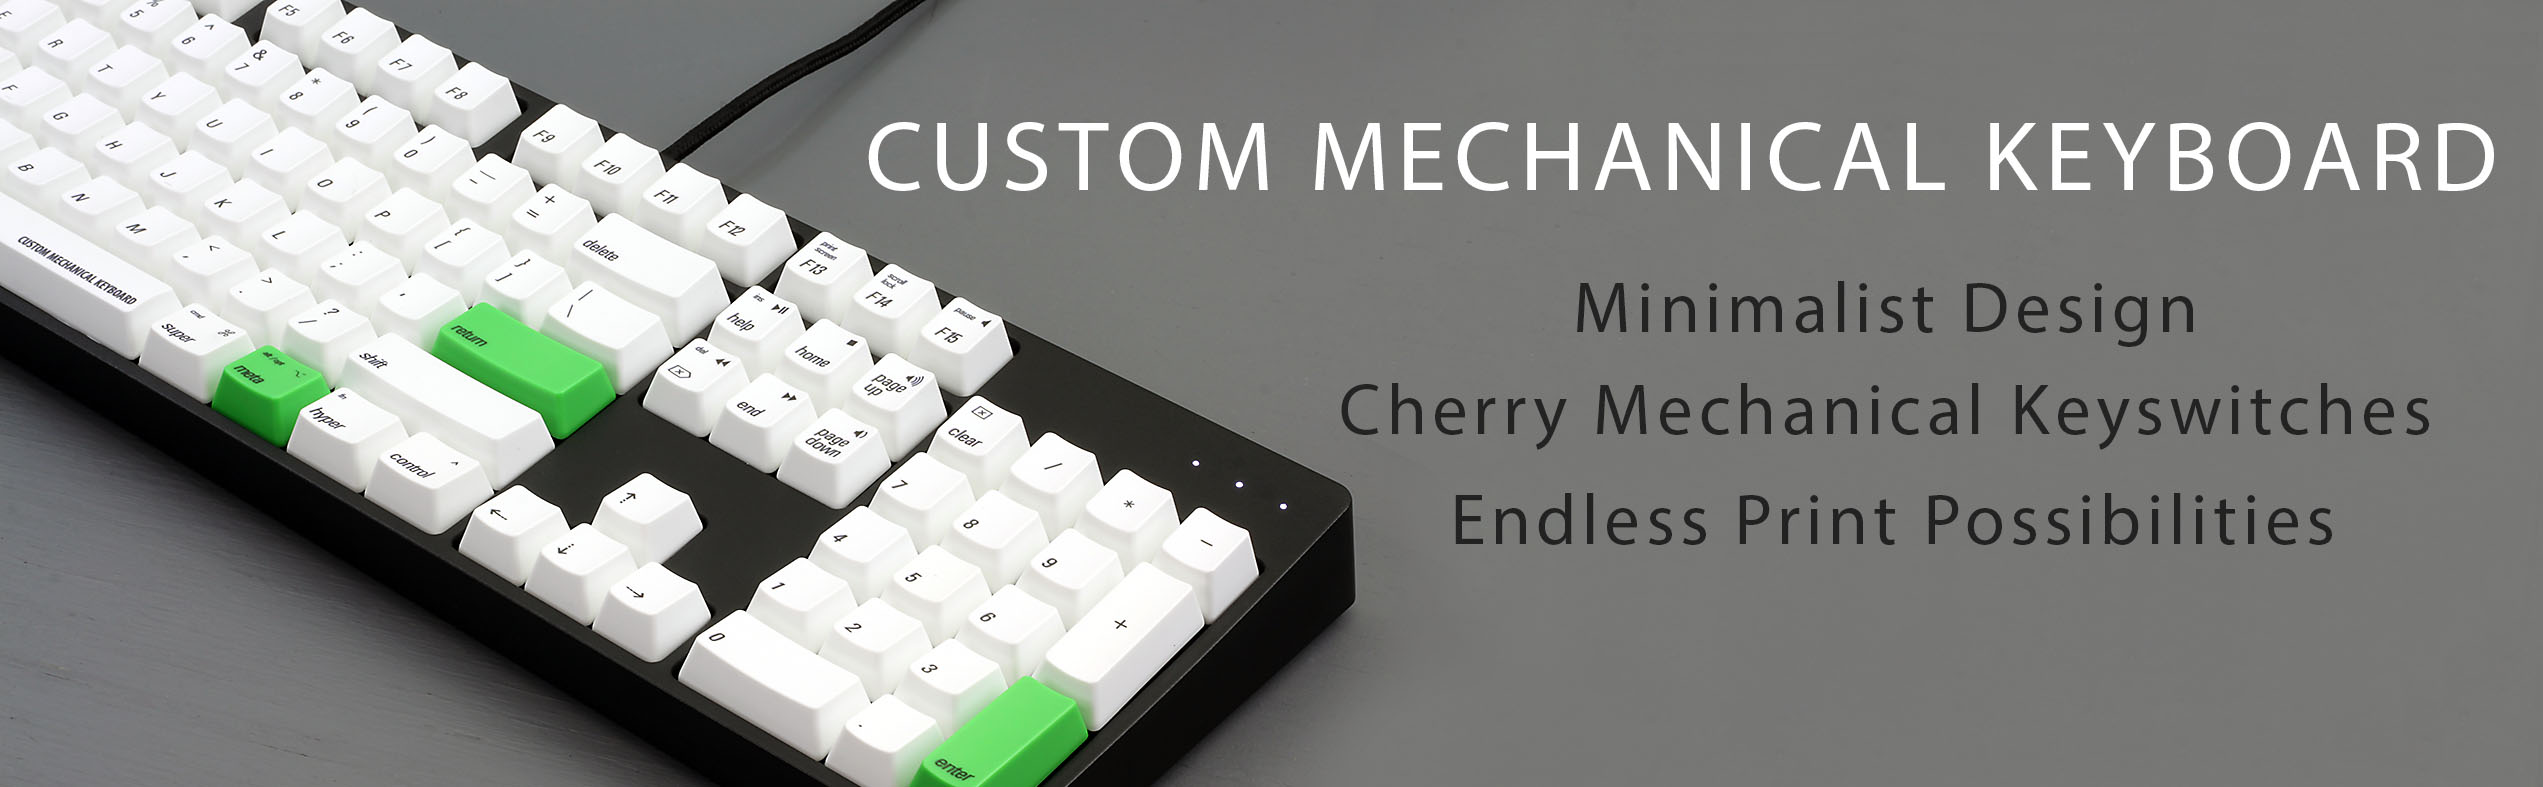 Max Keyboard Custom Mechanical Keyboards